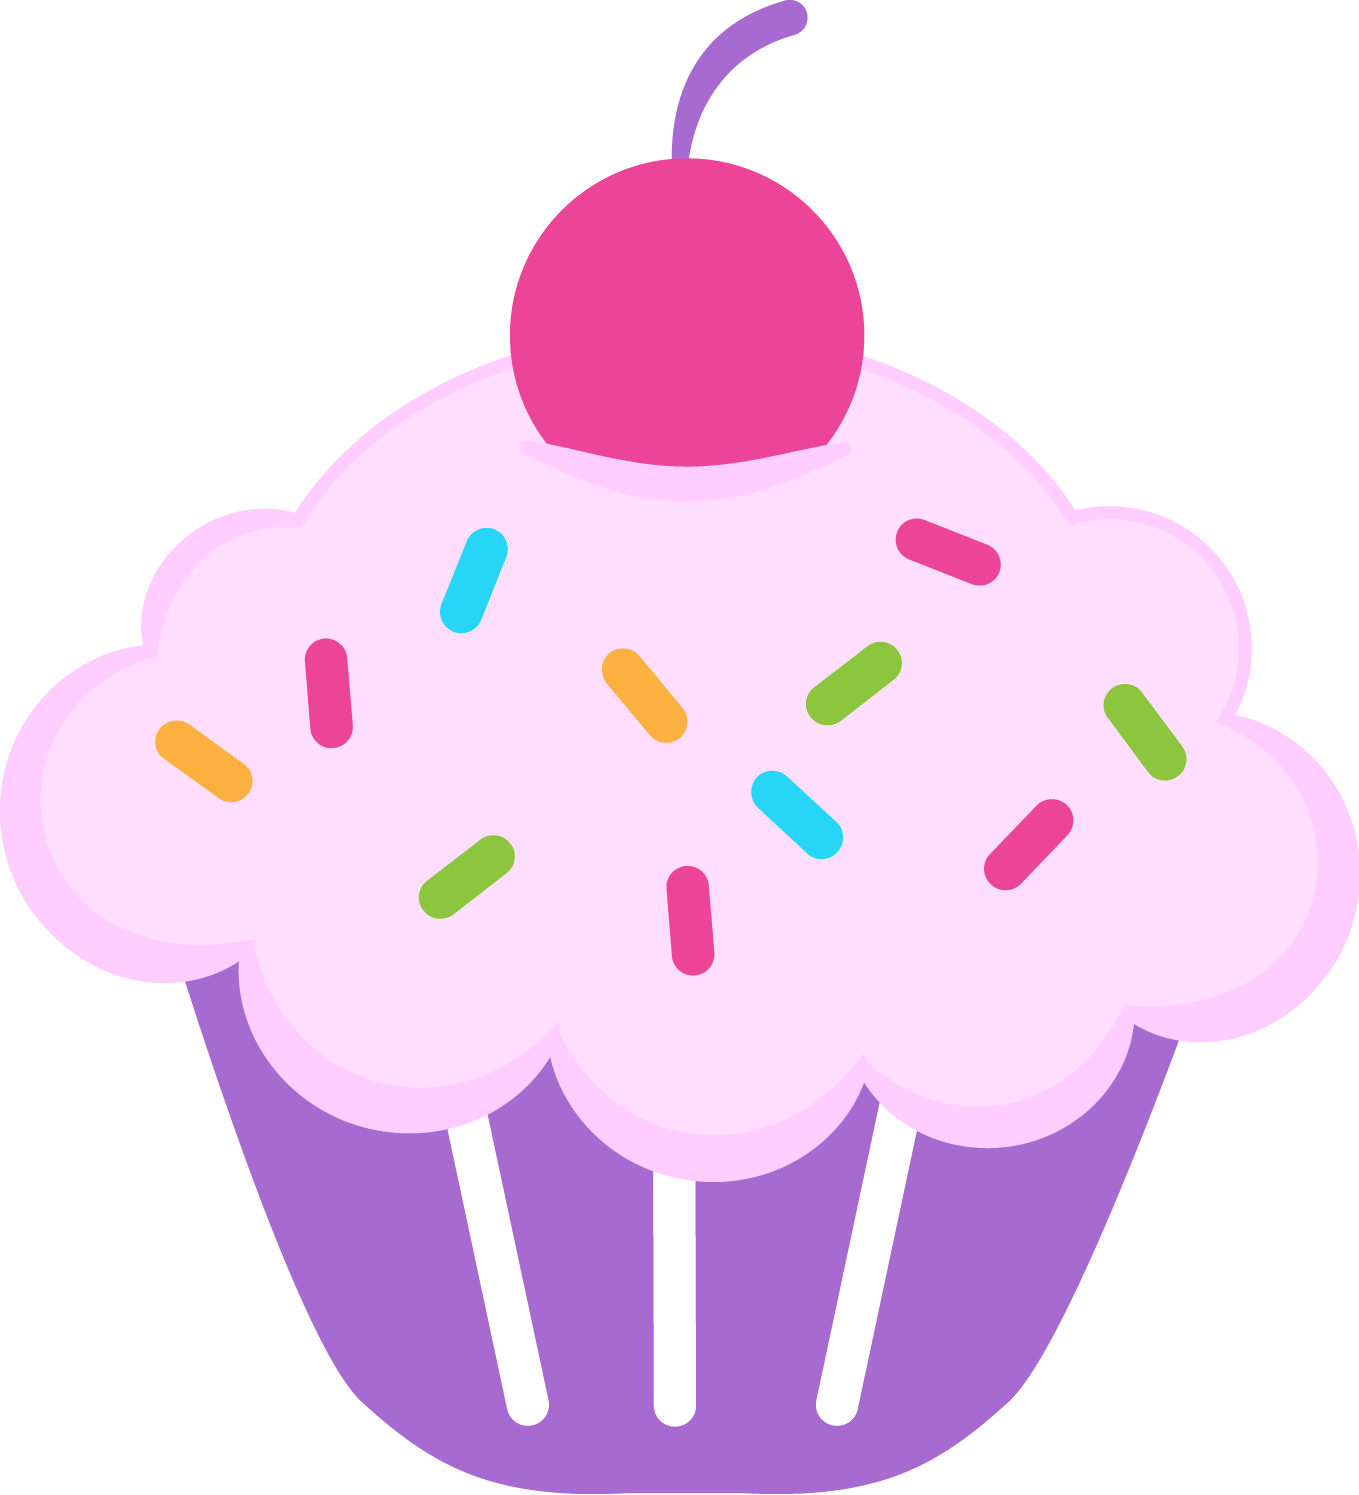 Cupcake Drawings and Cupcakes